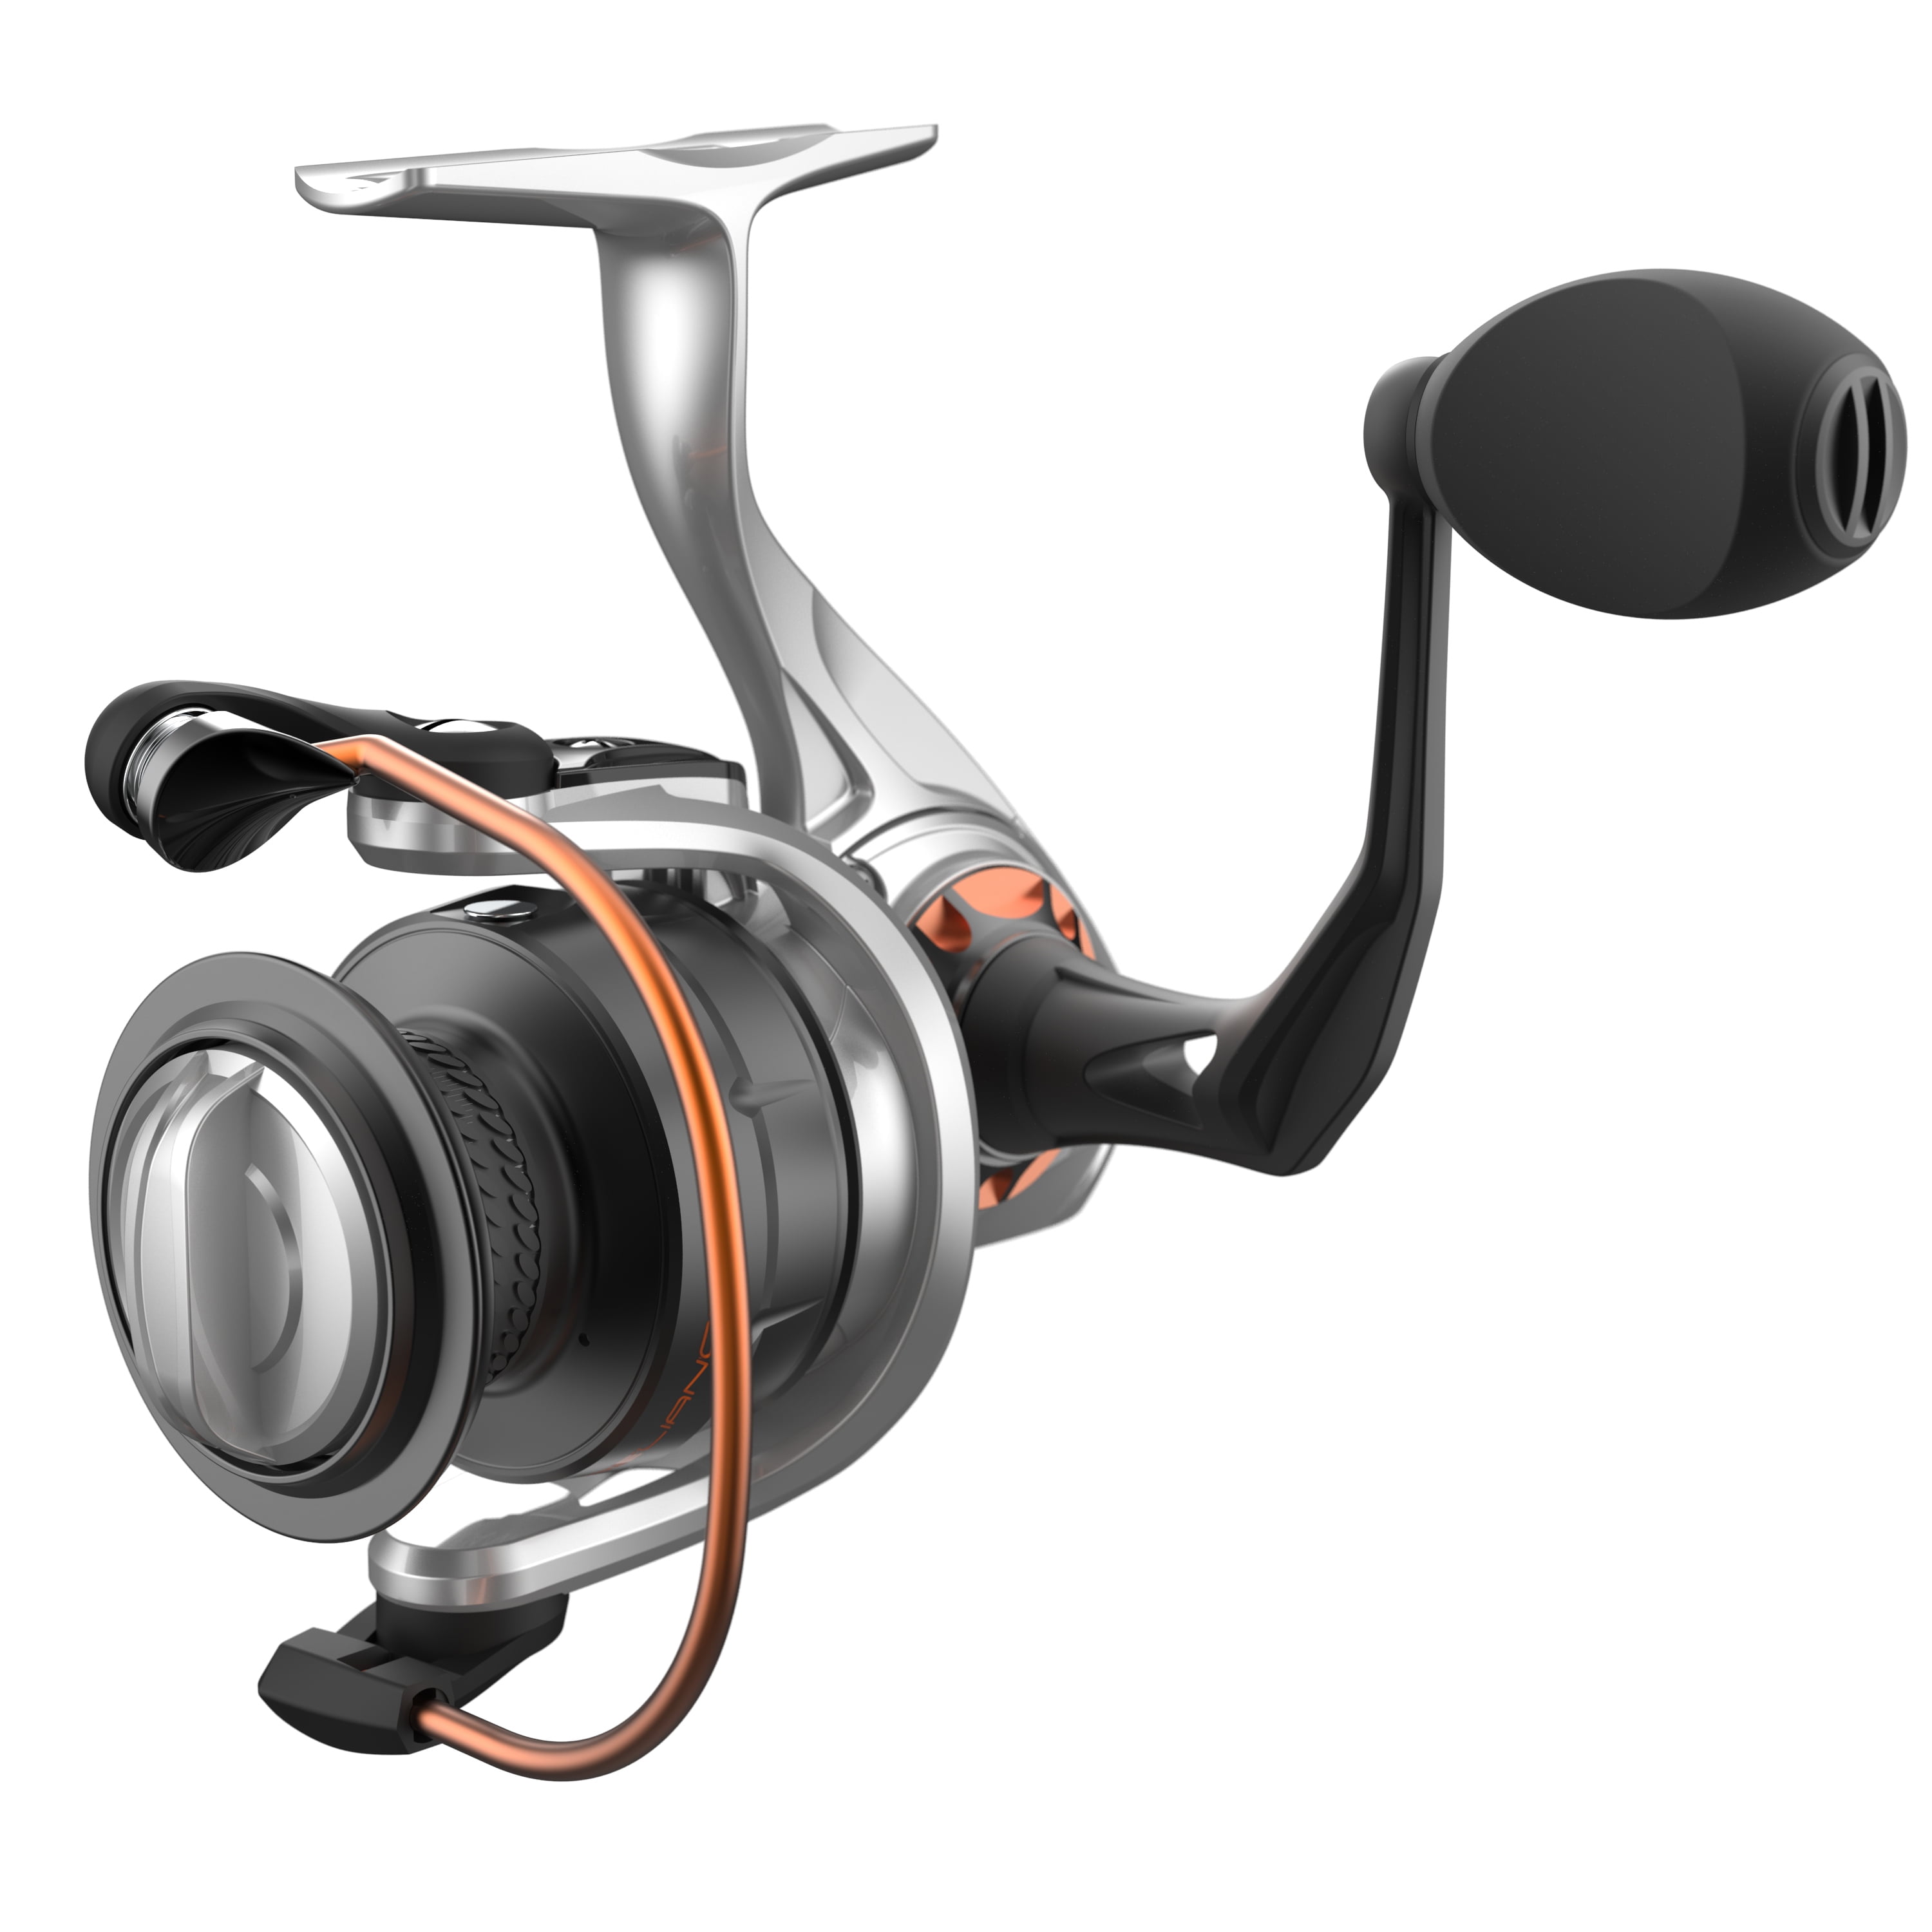 Ozark Trail OTX PRO 4000 Spinning Fishing Reel, 5.1:1 Gear Ratio